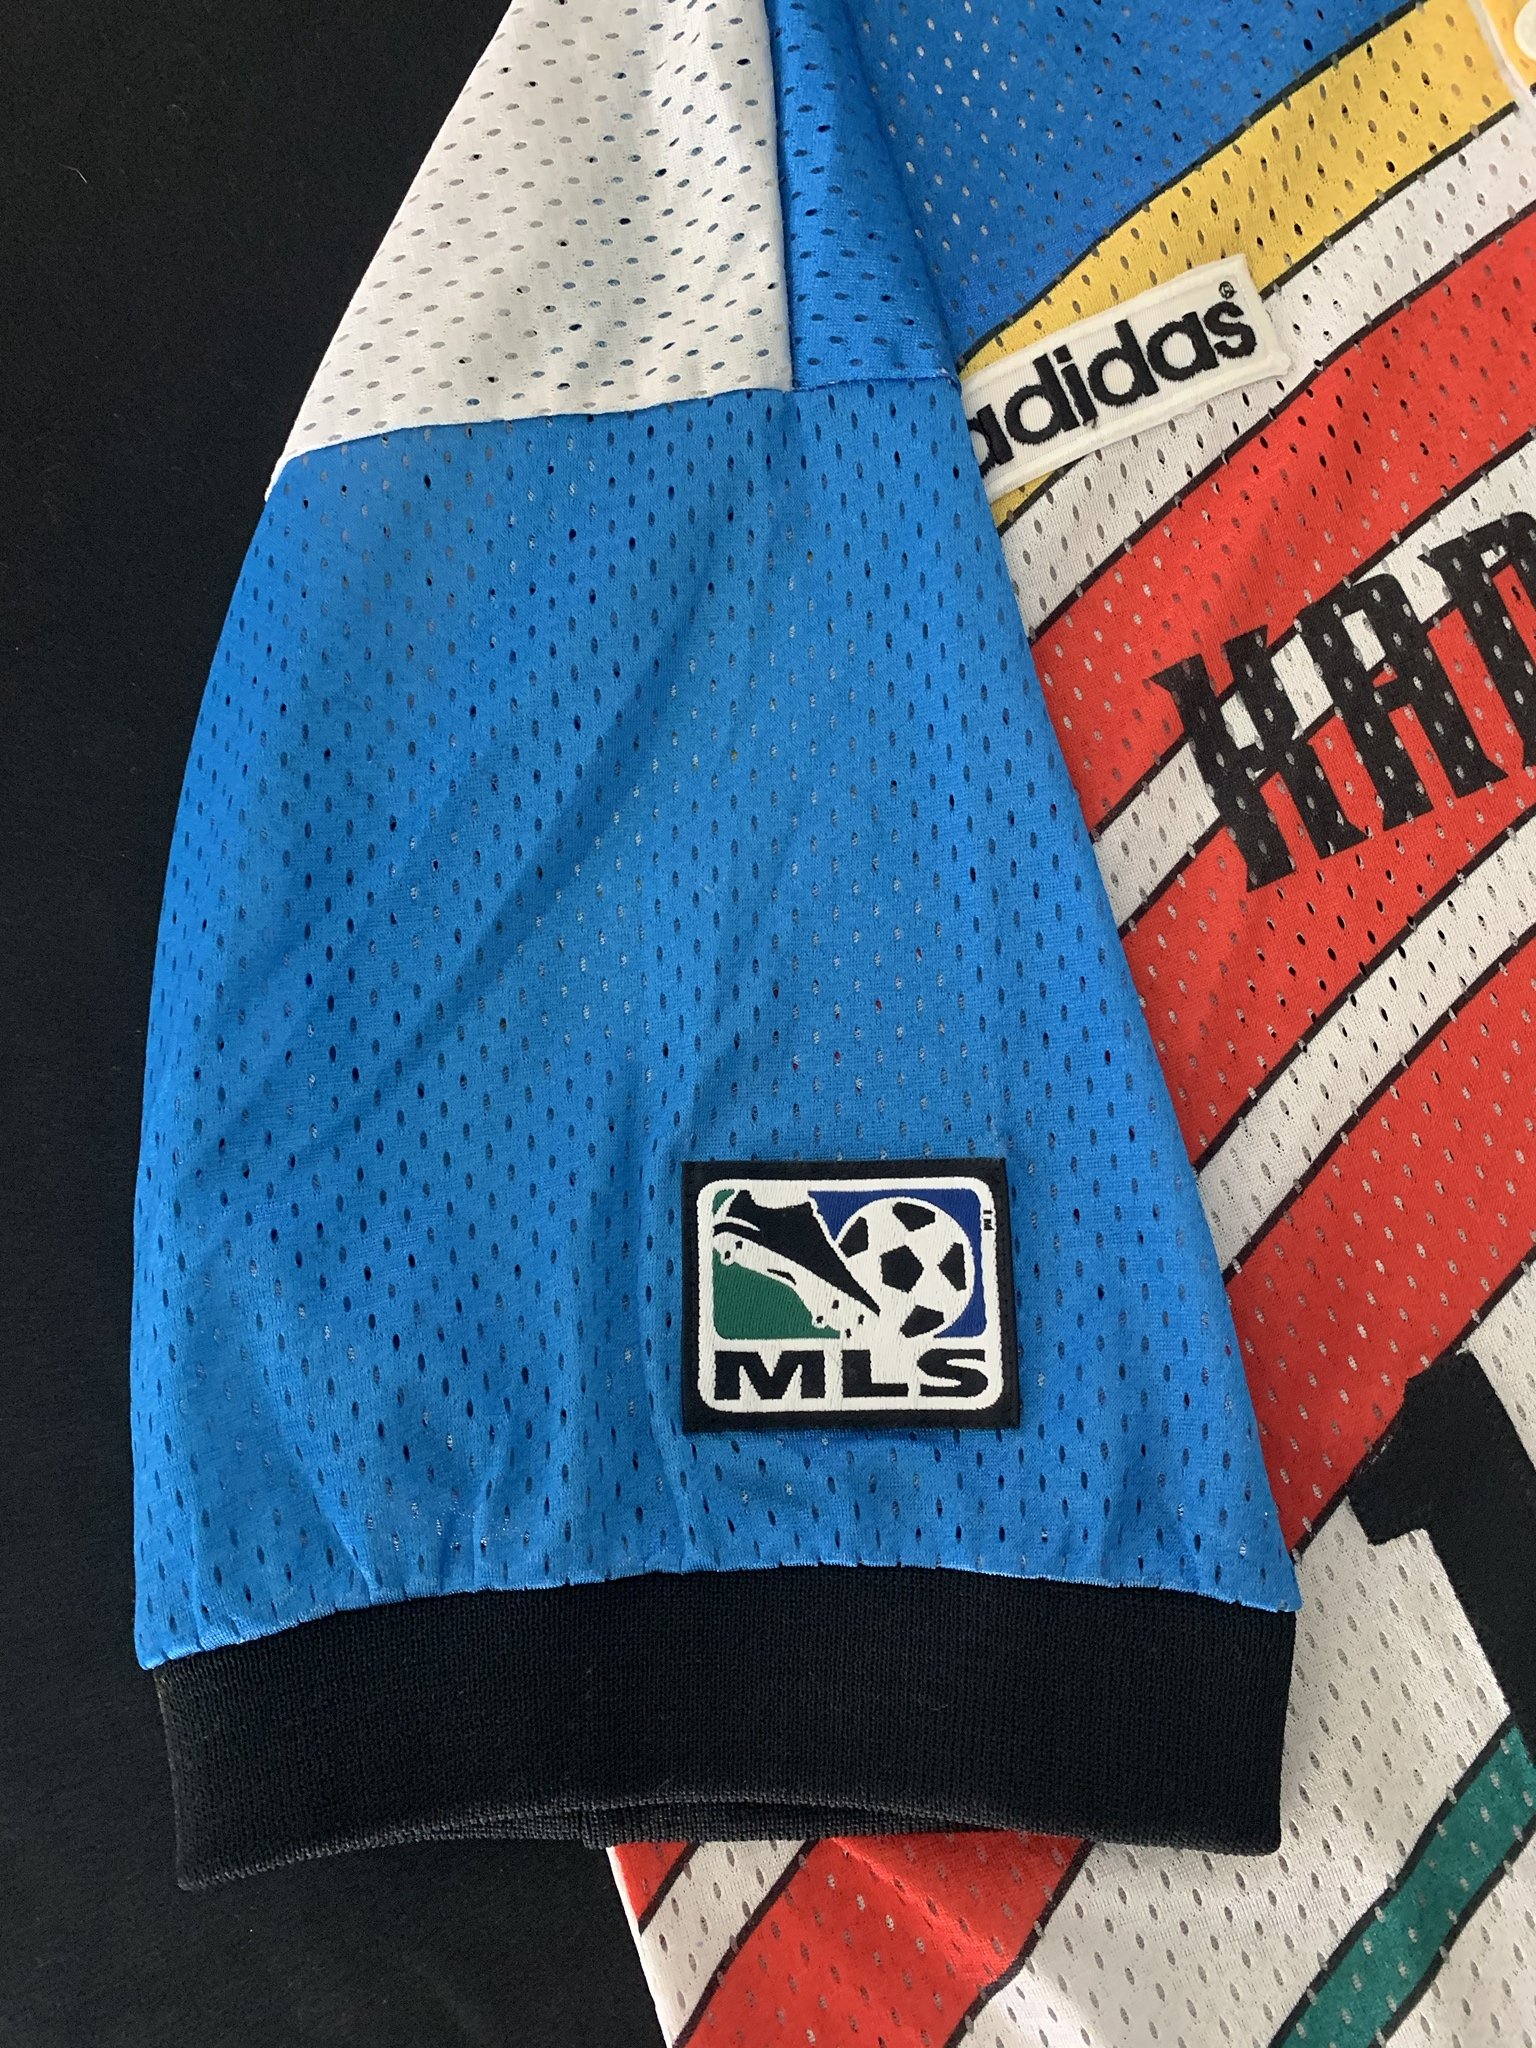 Kanzas City Wizards Home Soccer Jersey 1996/1997 Football Shirt Retro #11  Preki MLS